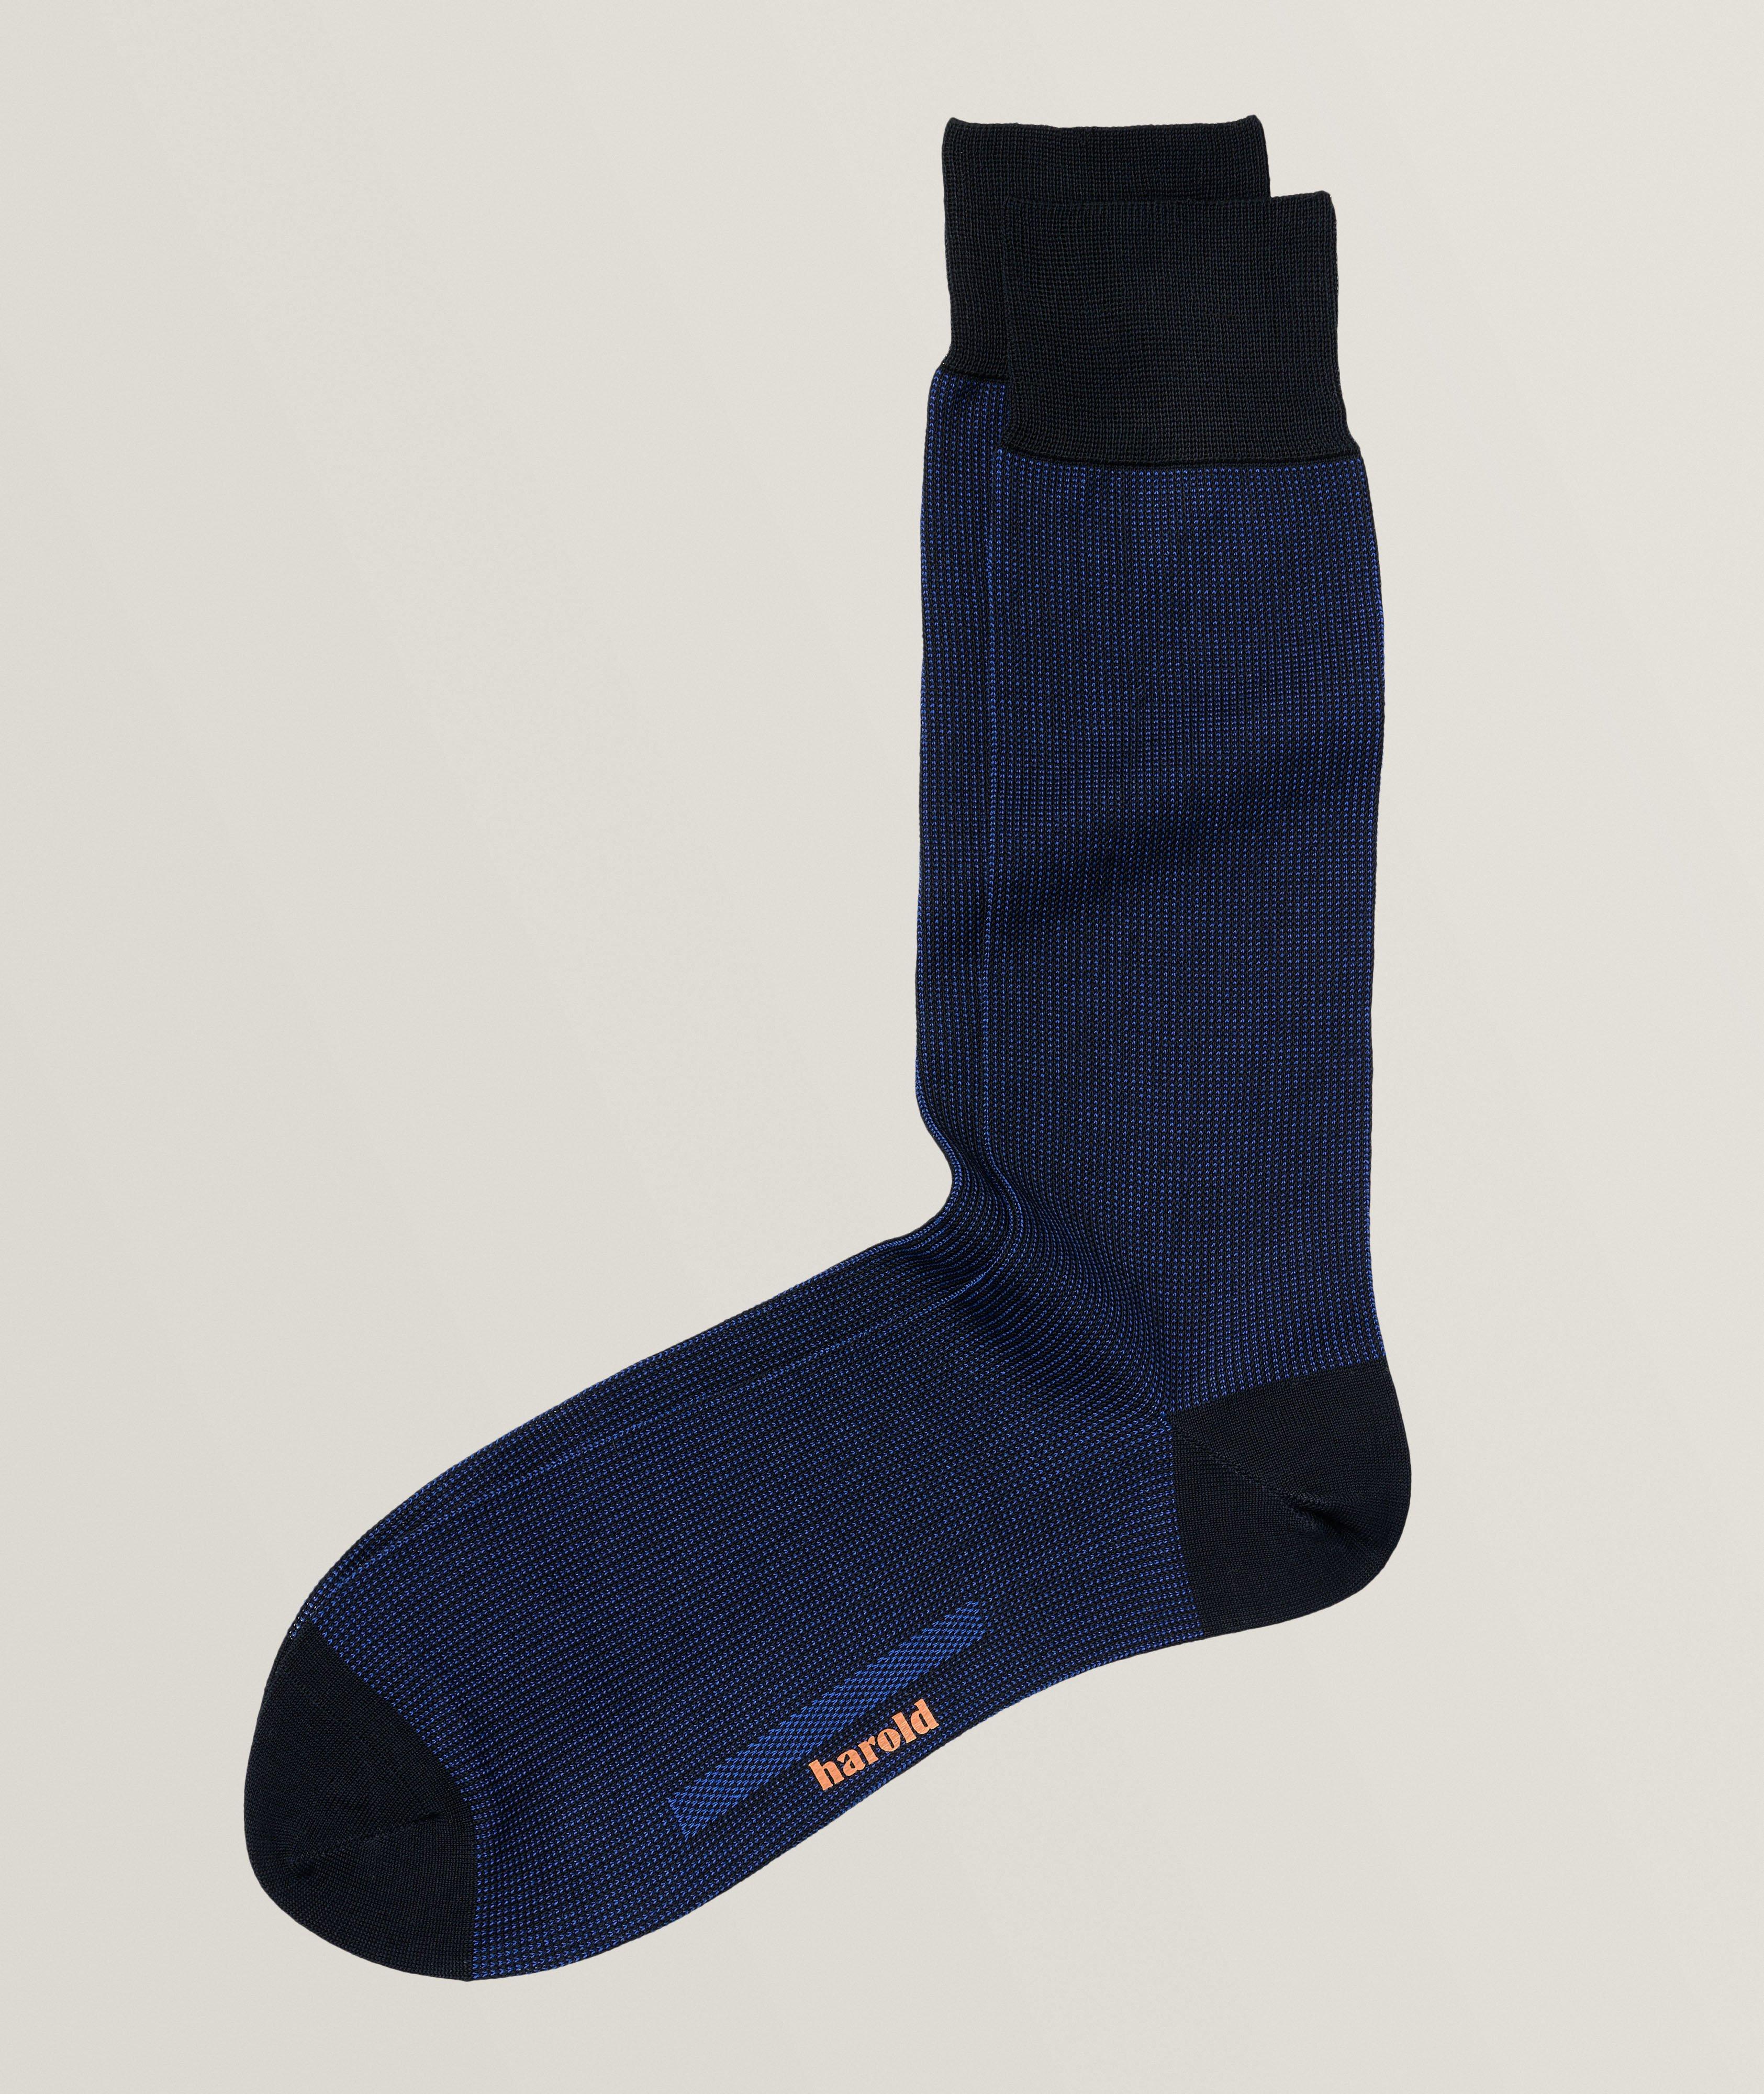 Birdseye Mercerized Cotton-Nylon Socks image 0